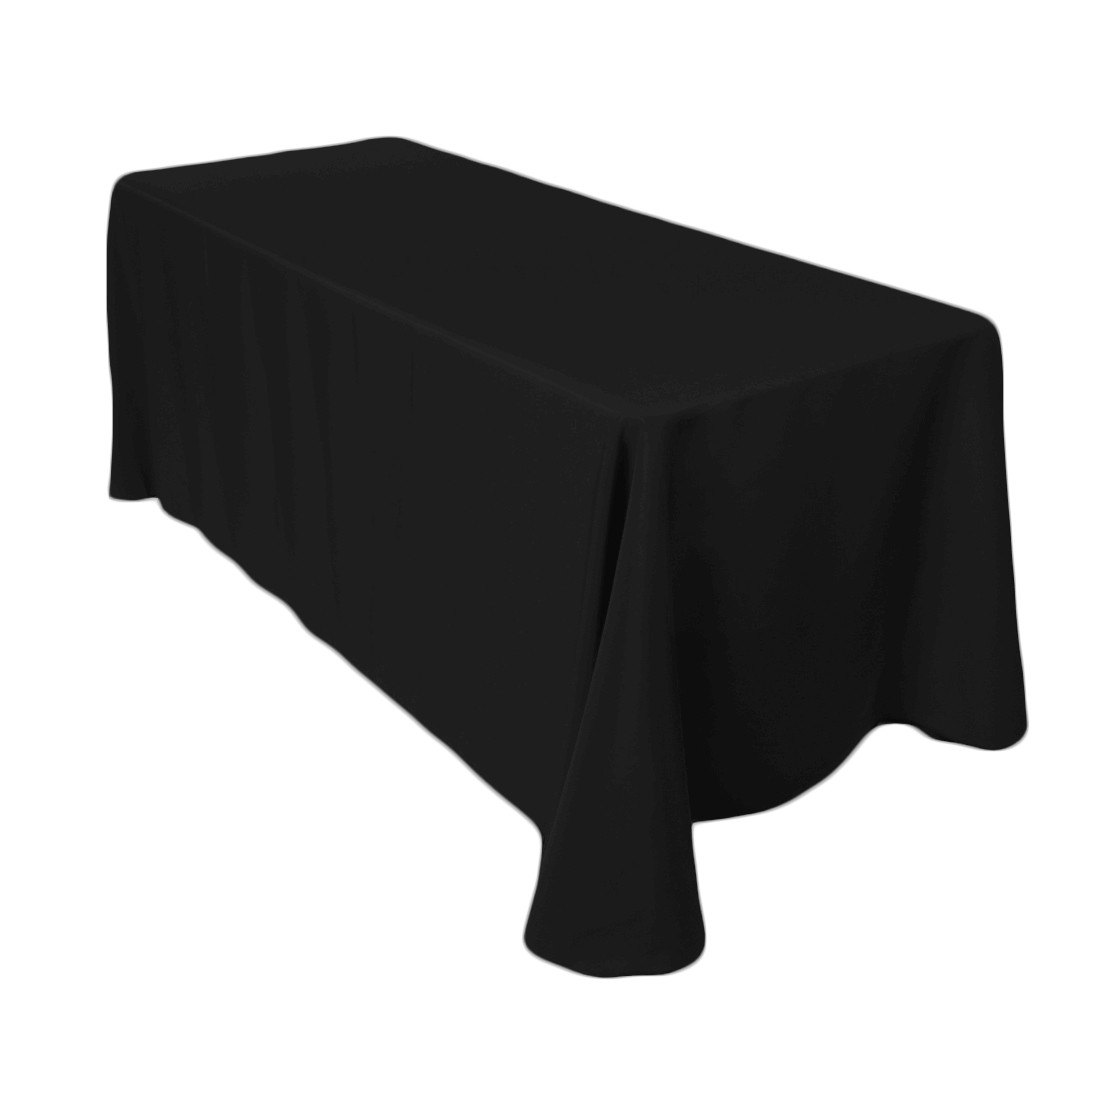 6 ft Polyester Black Table Drape